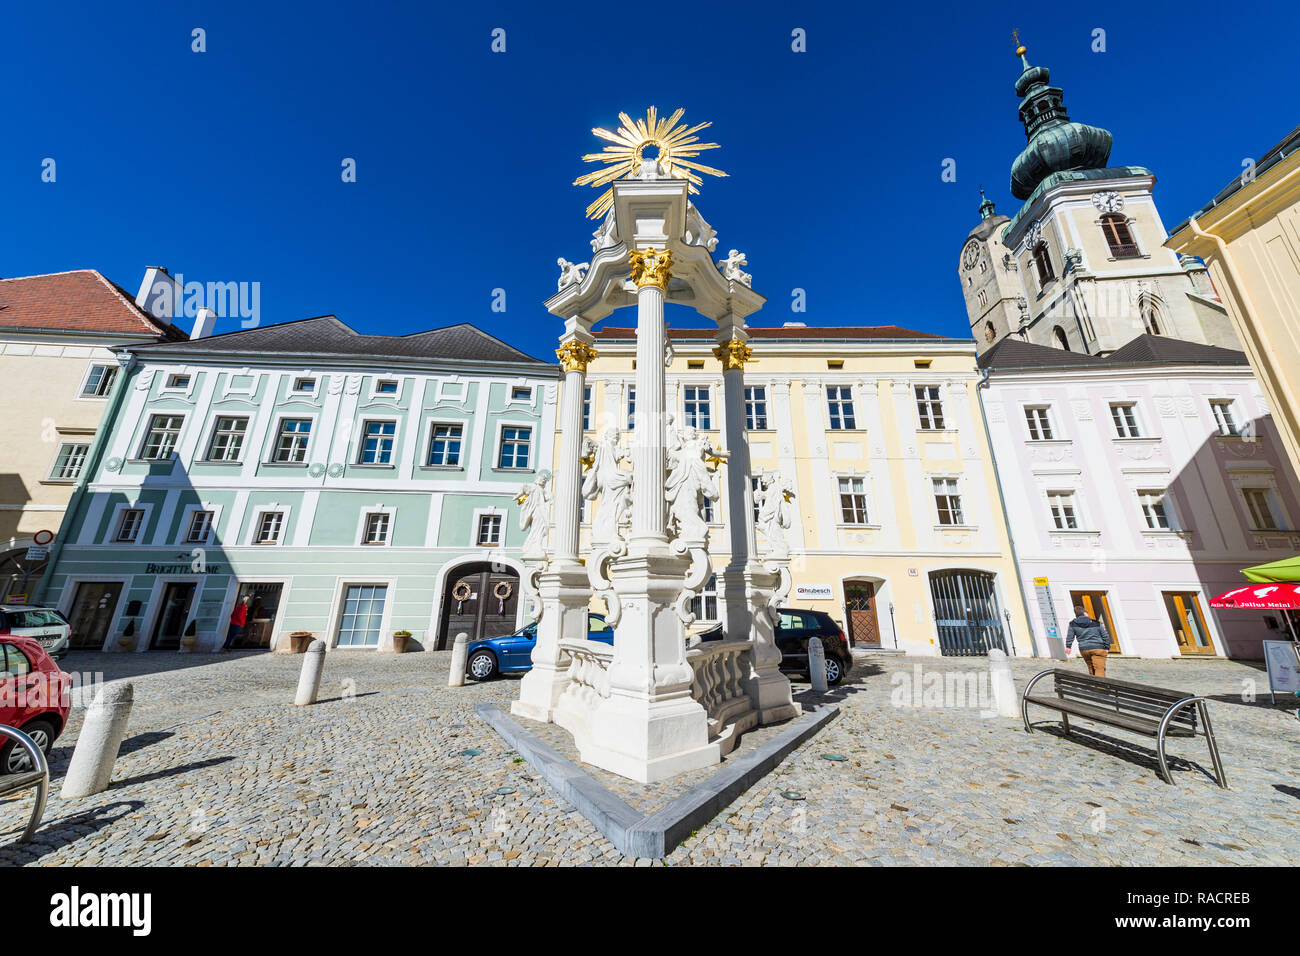 The historic center of Krems, Wachau, Austria, Europe Stock Photo